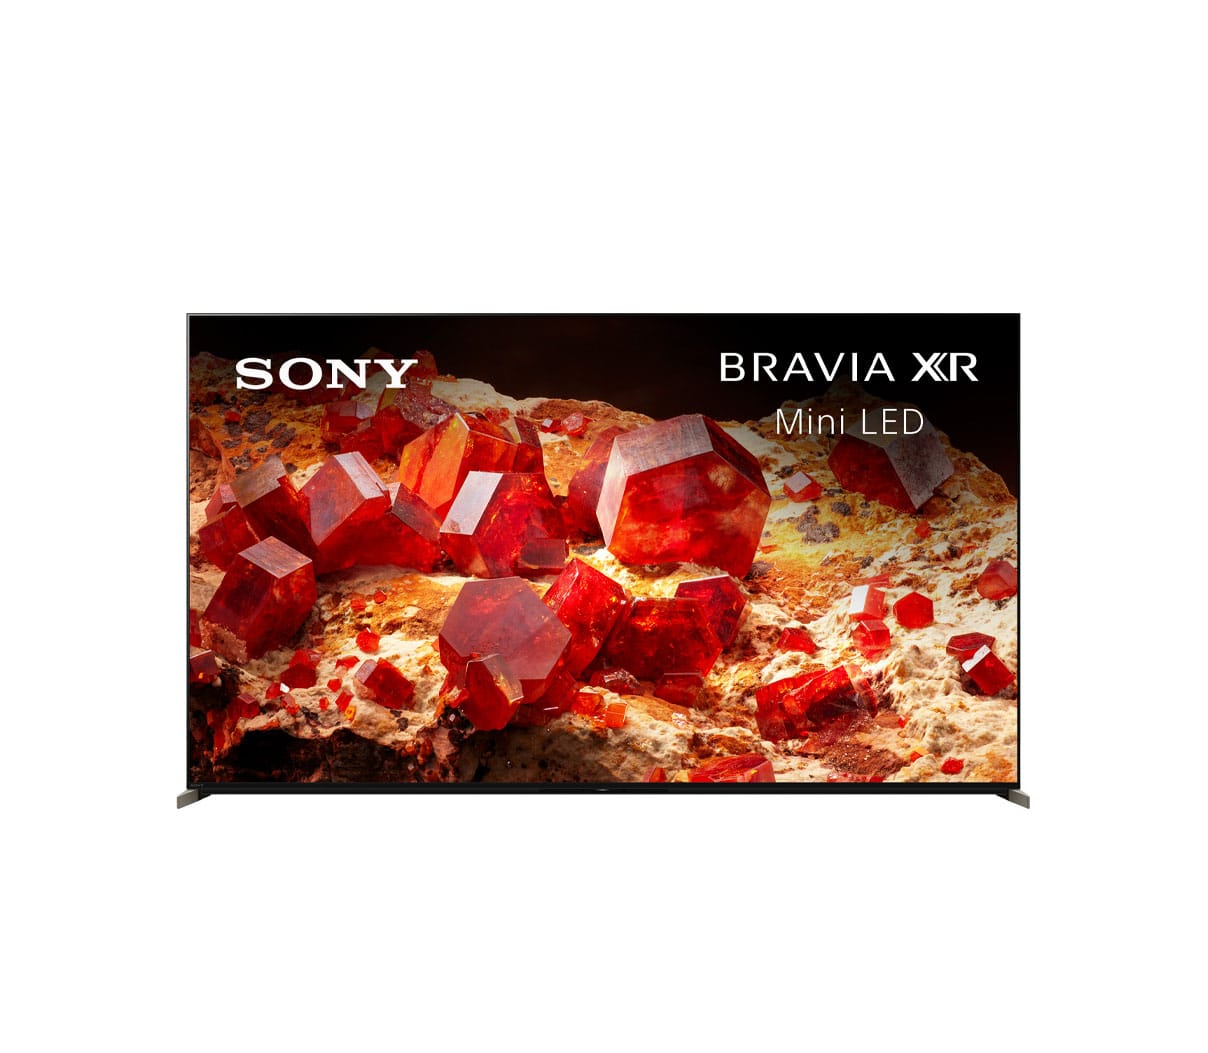 Sony XR X93L Series 4K ULTRA HD MINI LED TV with XR Cognitive Intelligence Processor